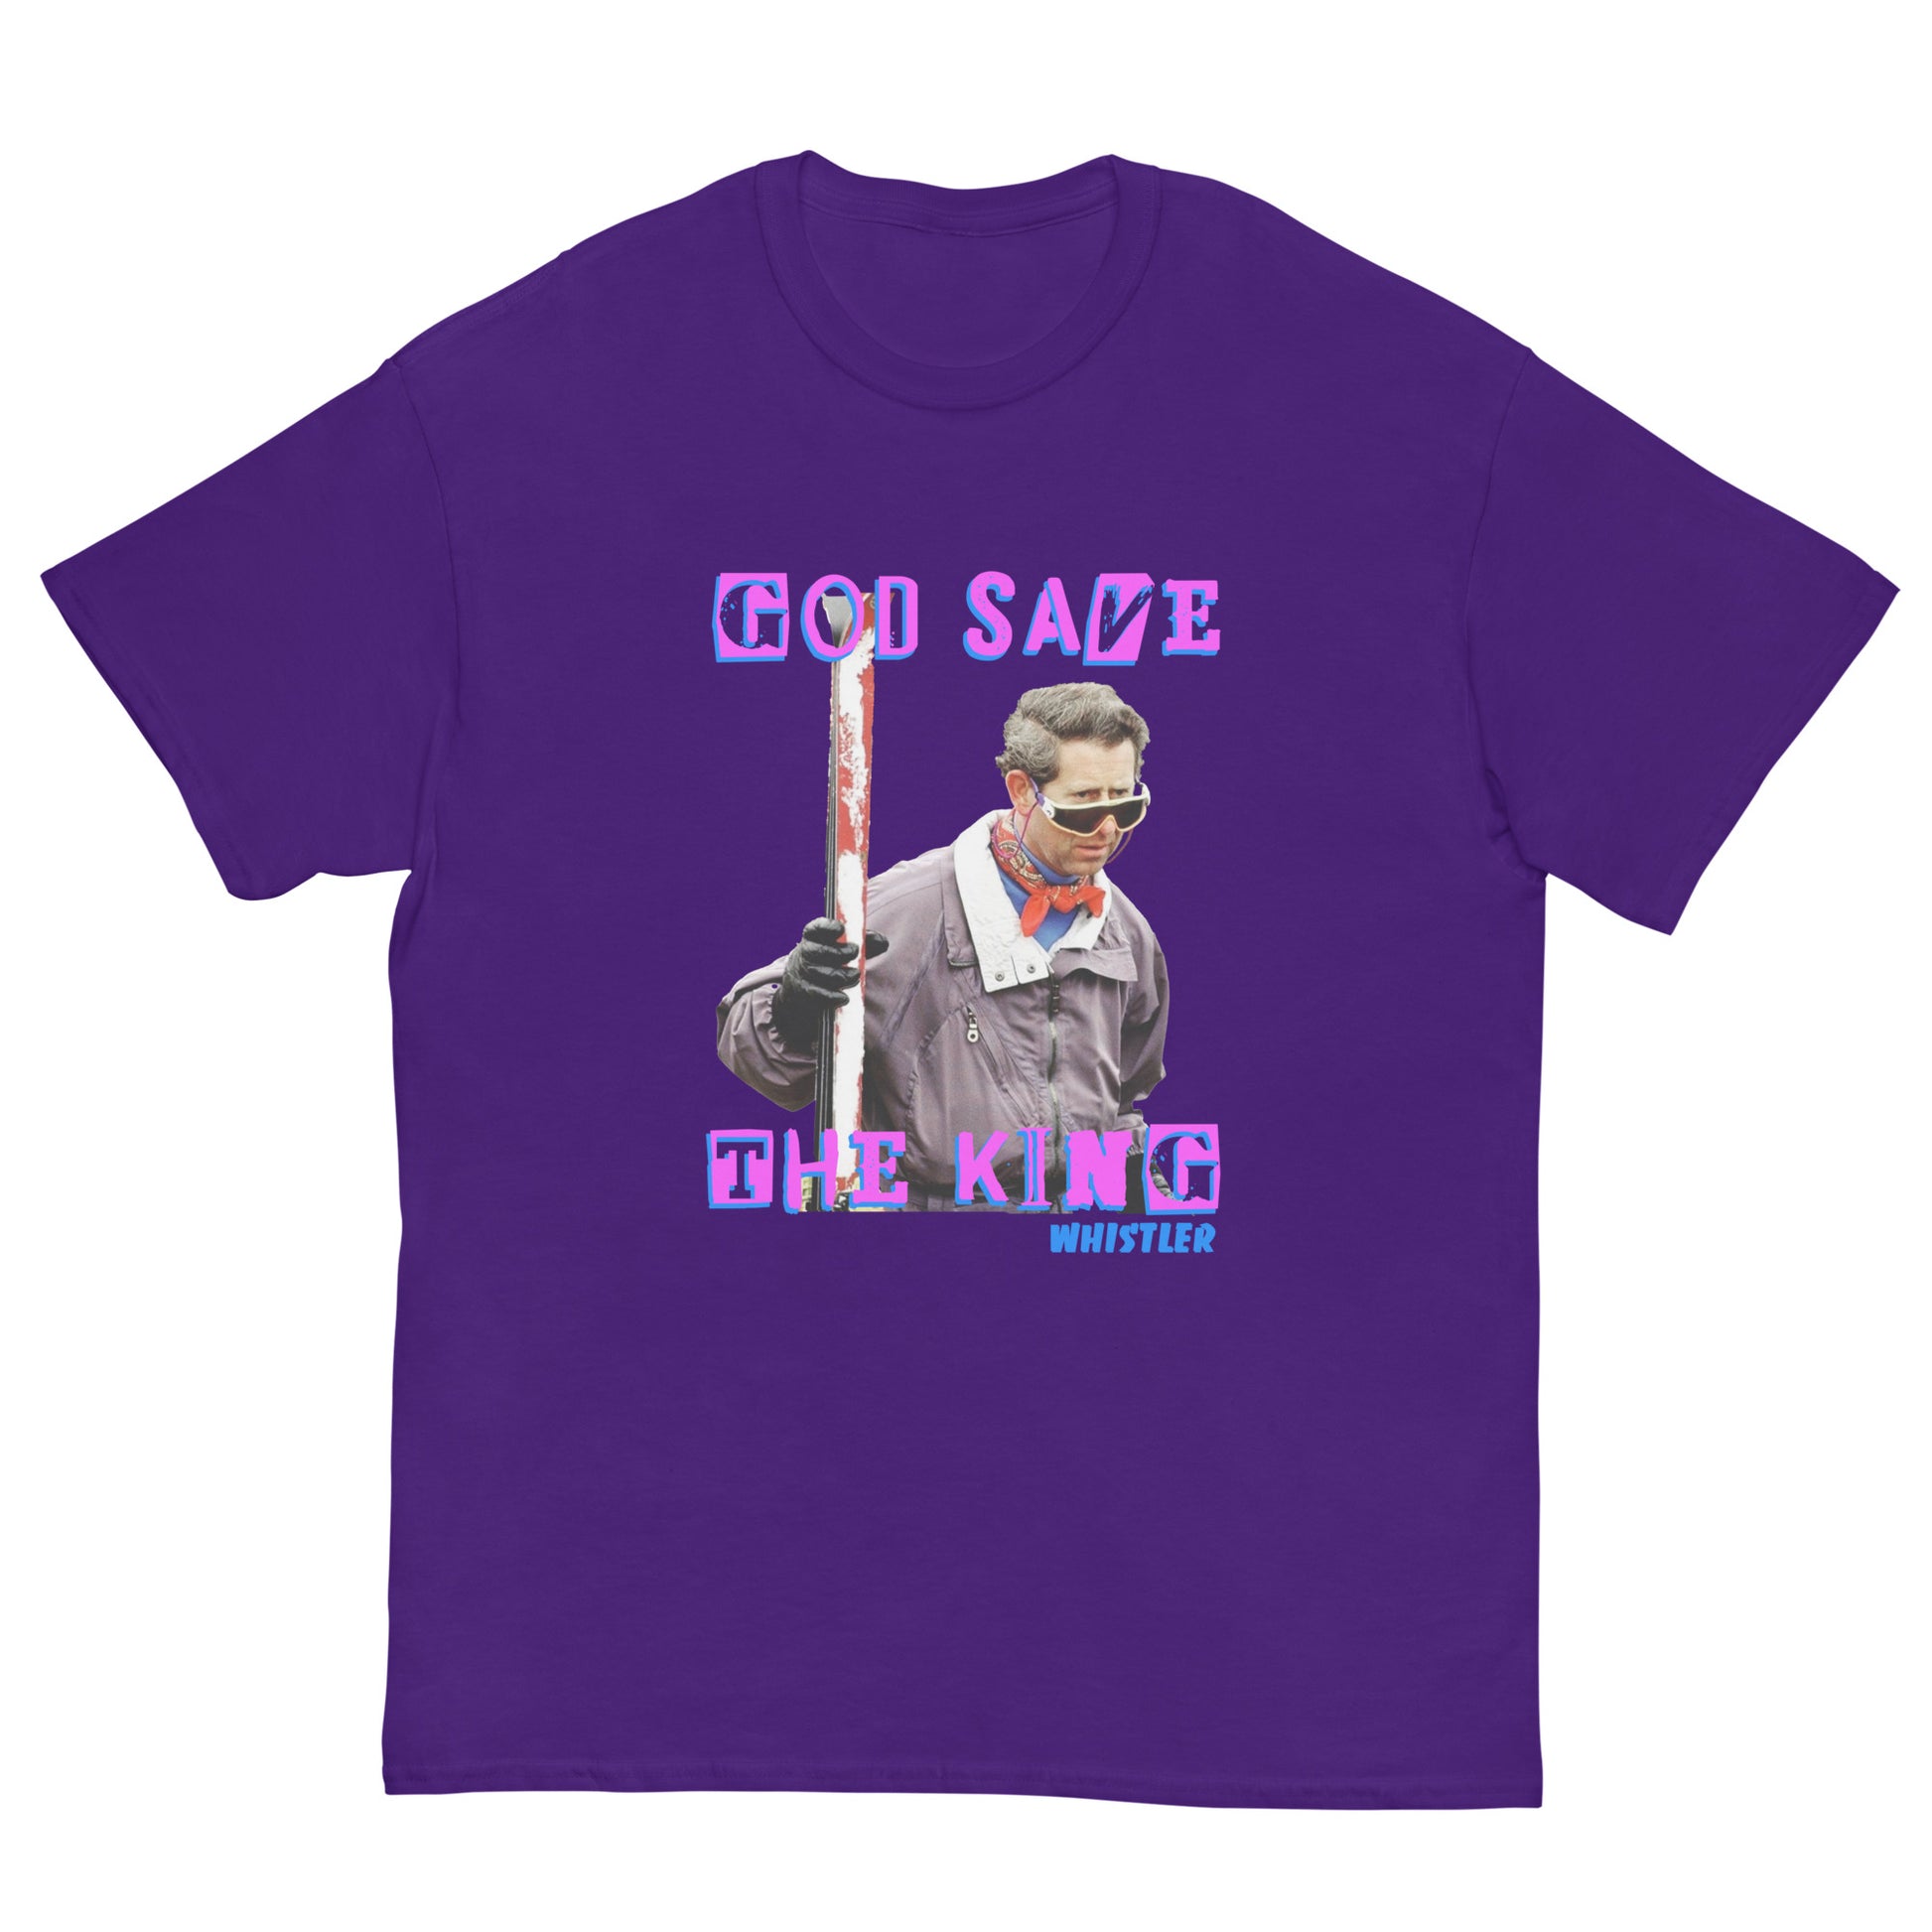 printed t-shirt god save the king whistler purple